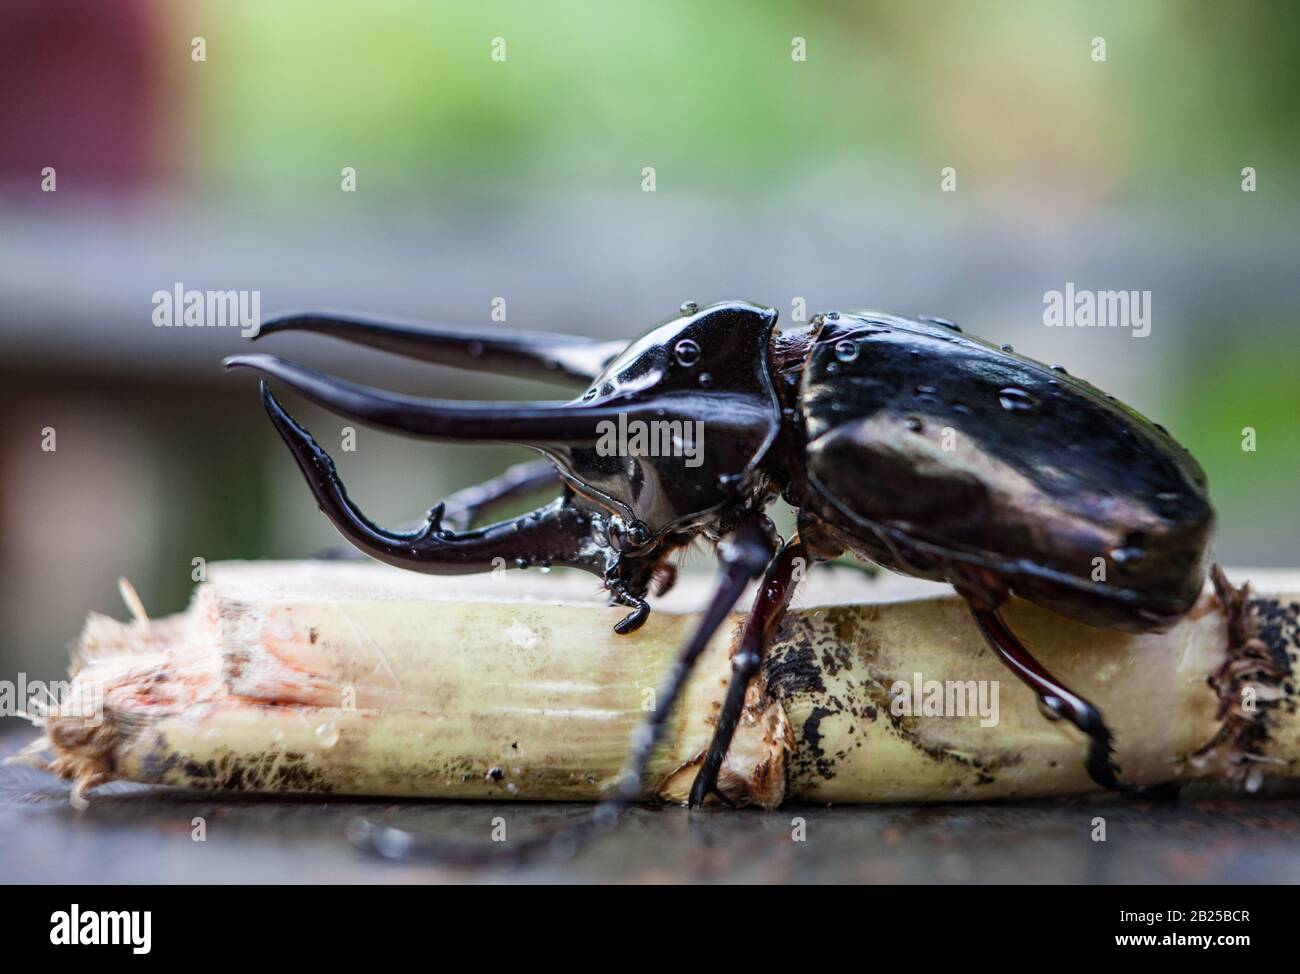 Black rhinoceros beetle in wild nature close-up. Stock Photo